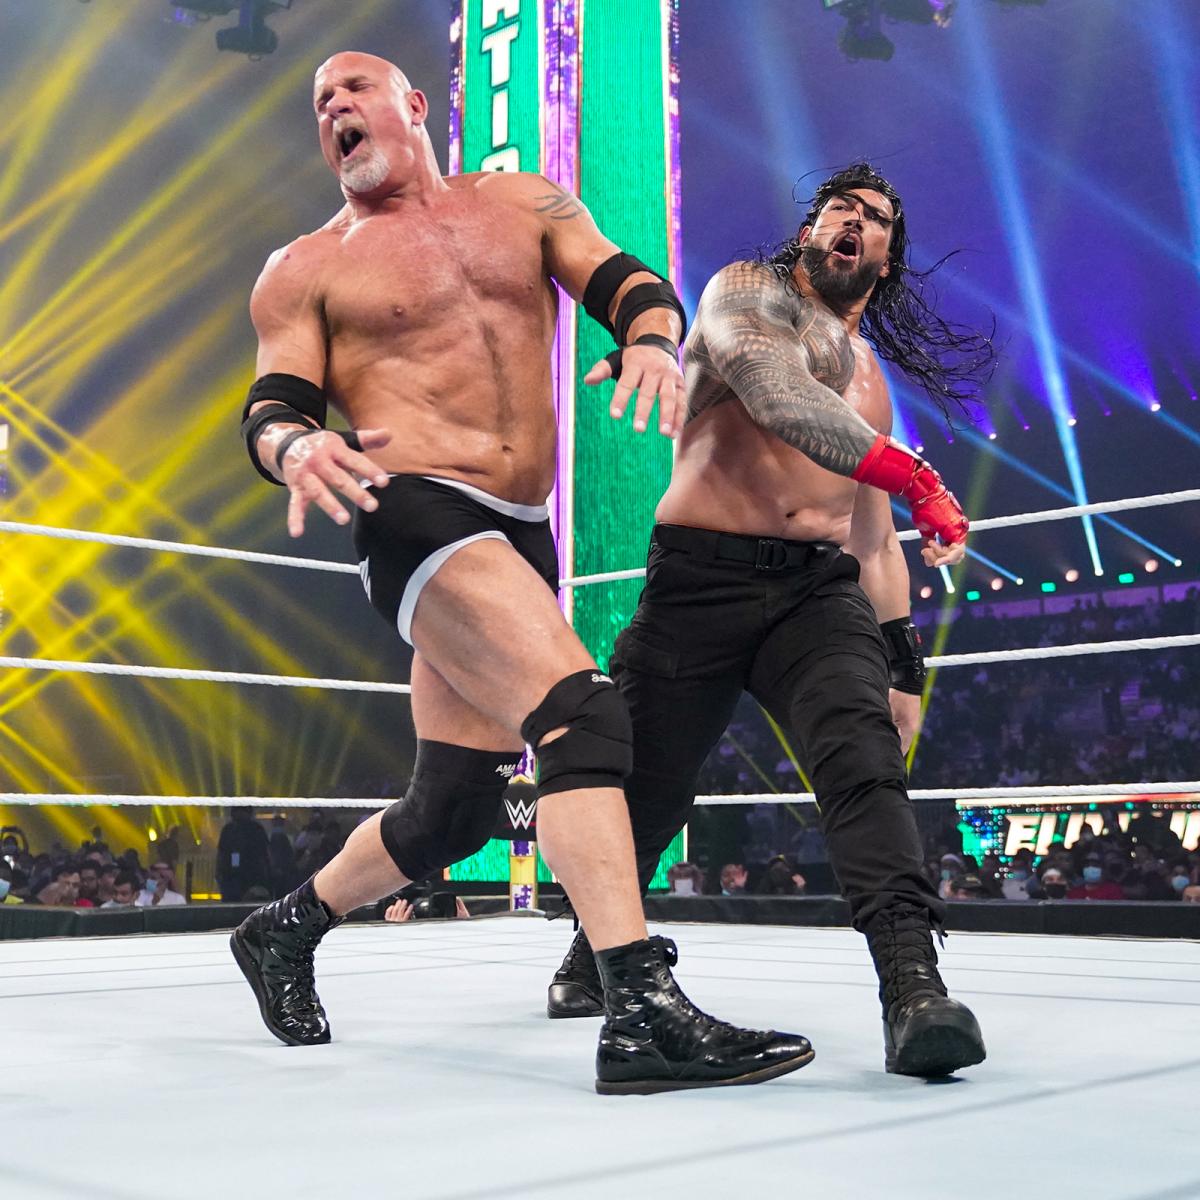 WWEユニバーサル王者レインズ（右）と激しい攻防を繰り広げた「超人類」ゴールドバーグ（C）2022 WWE, Inc. All Rights Reserved.